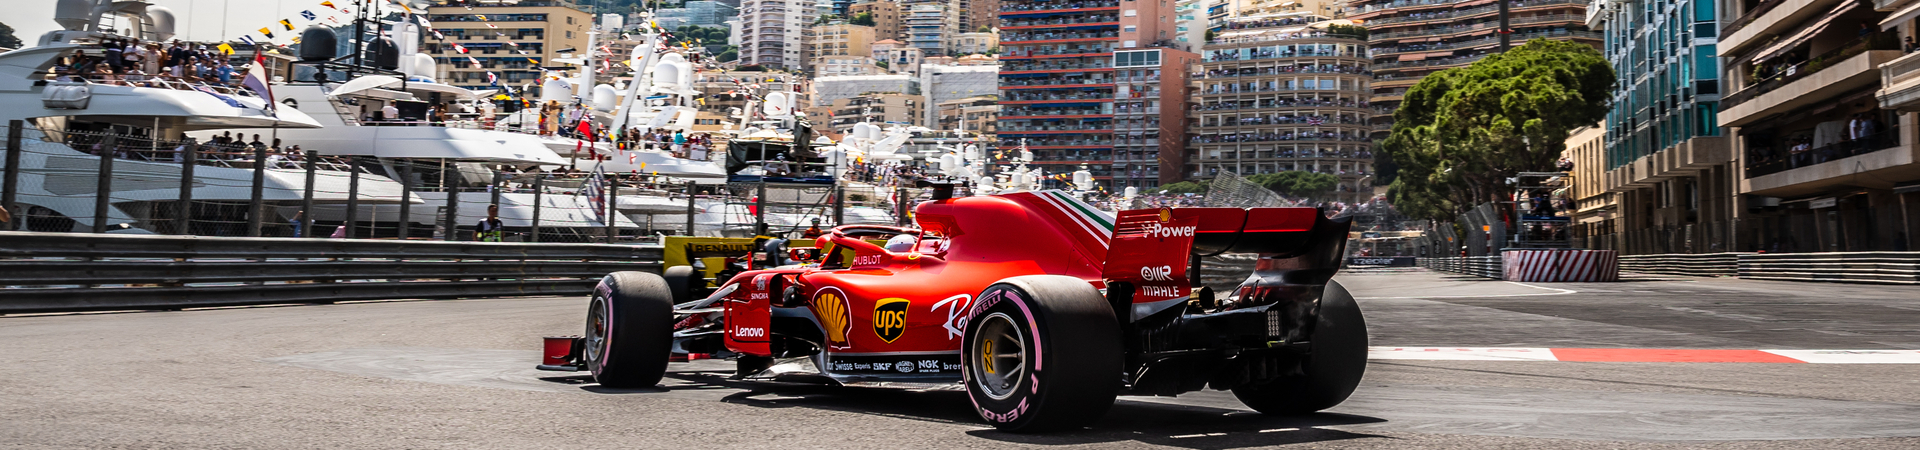 Monaco F1 baner